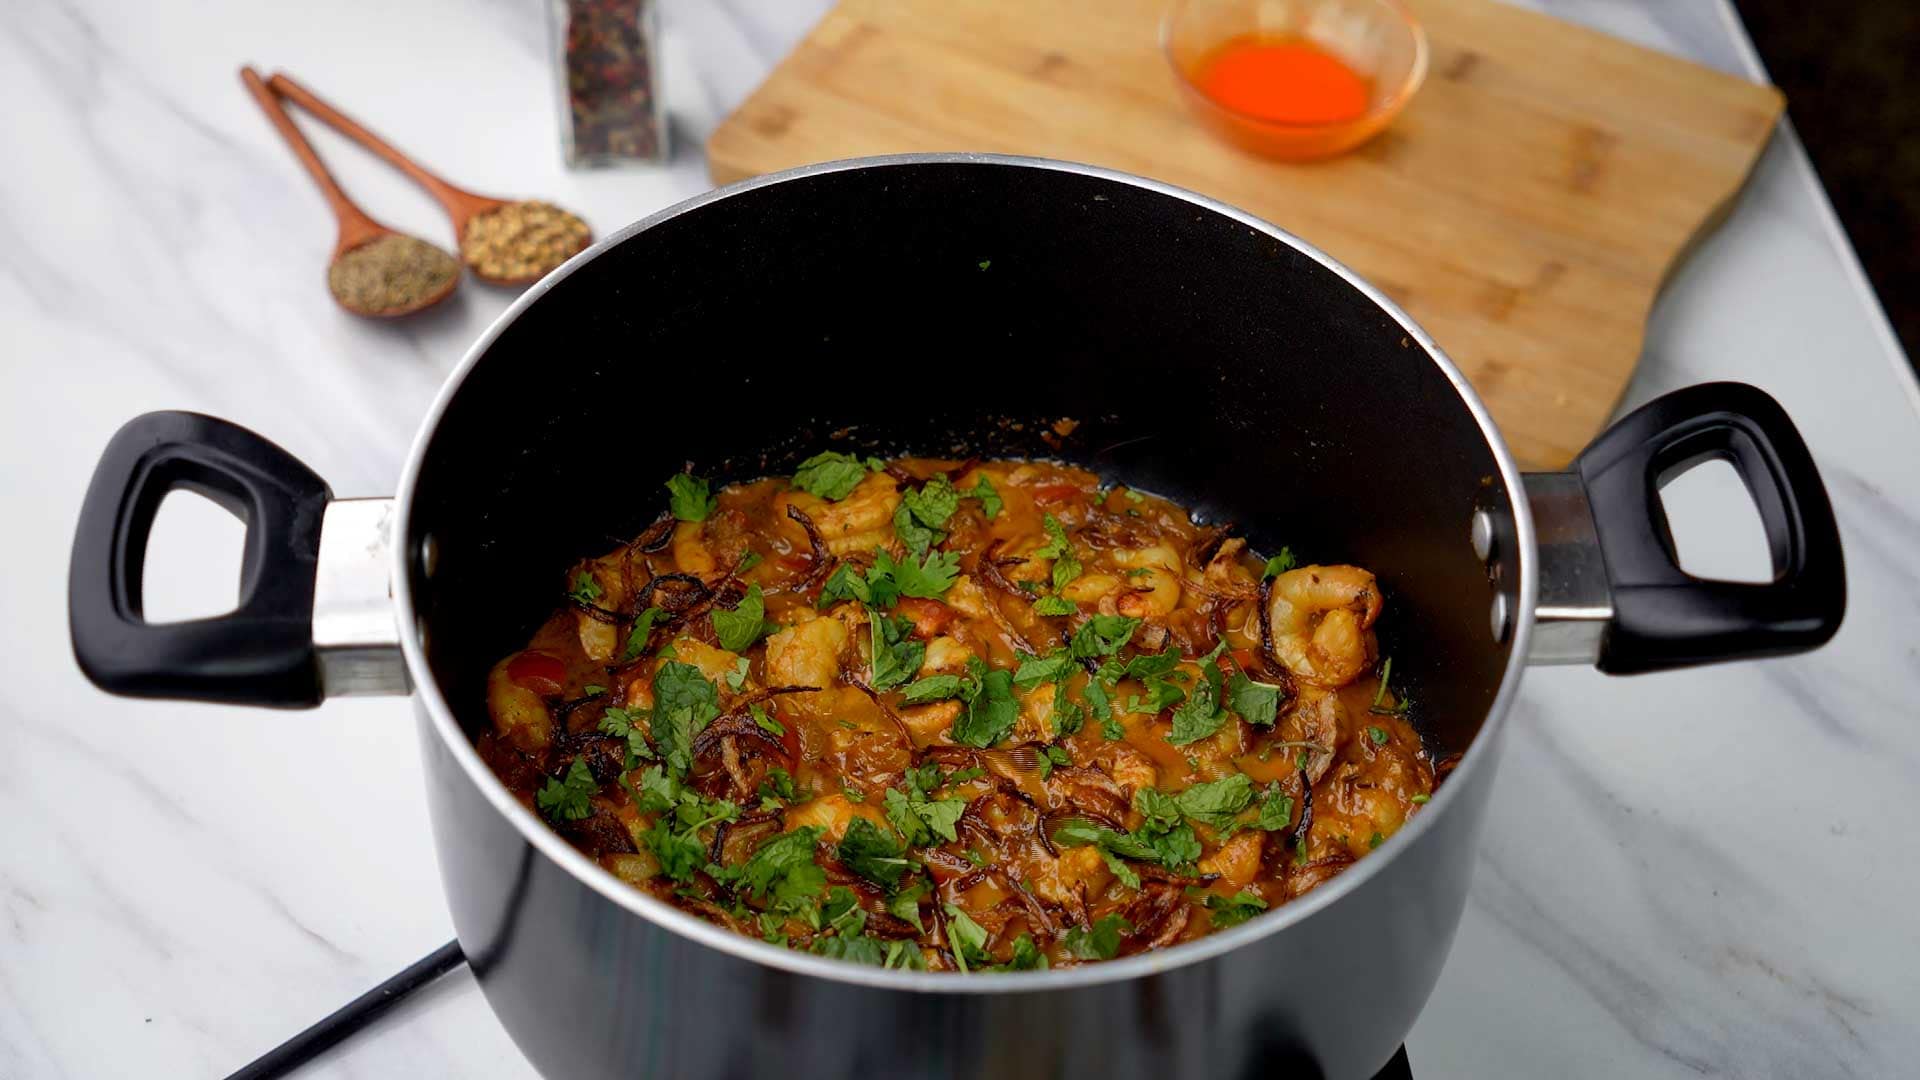 Shrimp biryani in a pan garnished with cilantro